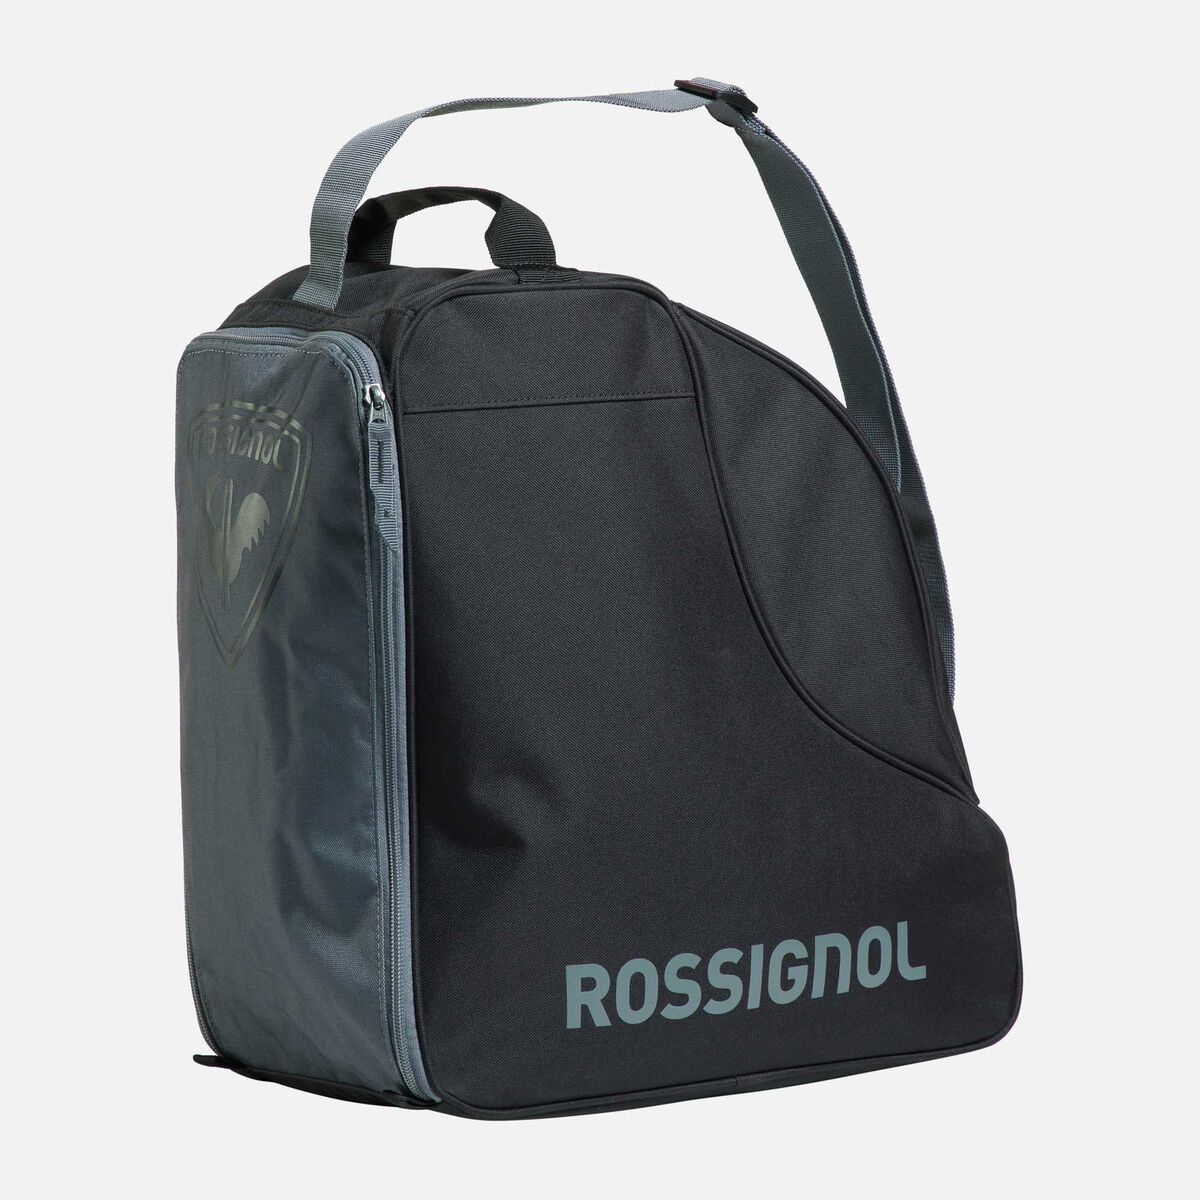 Unisex Tactic Boot Bag, Bags, backpacks & travel bags